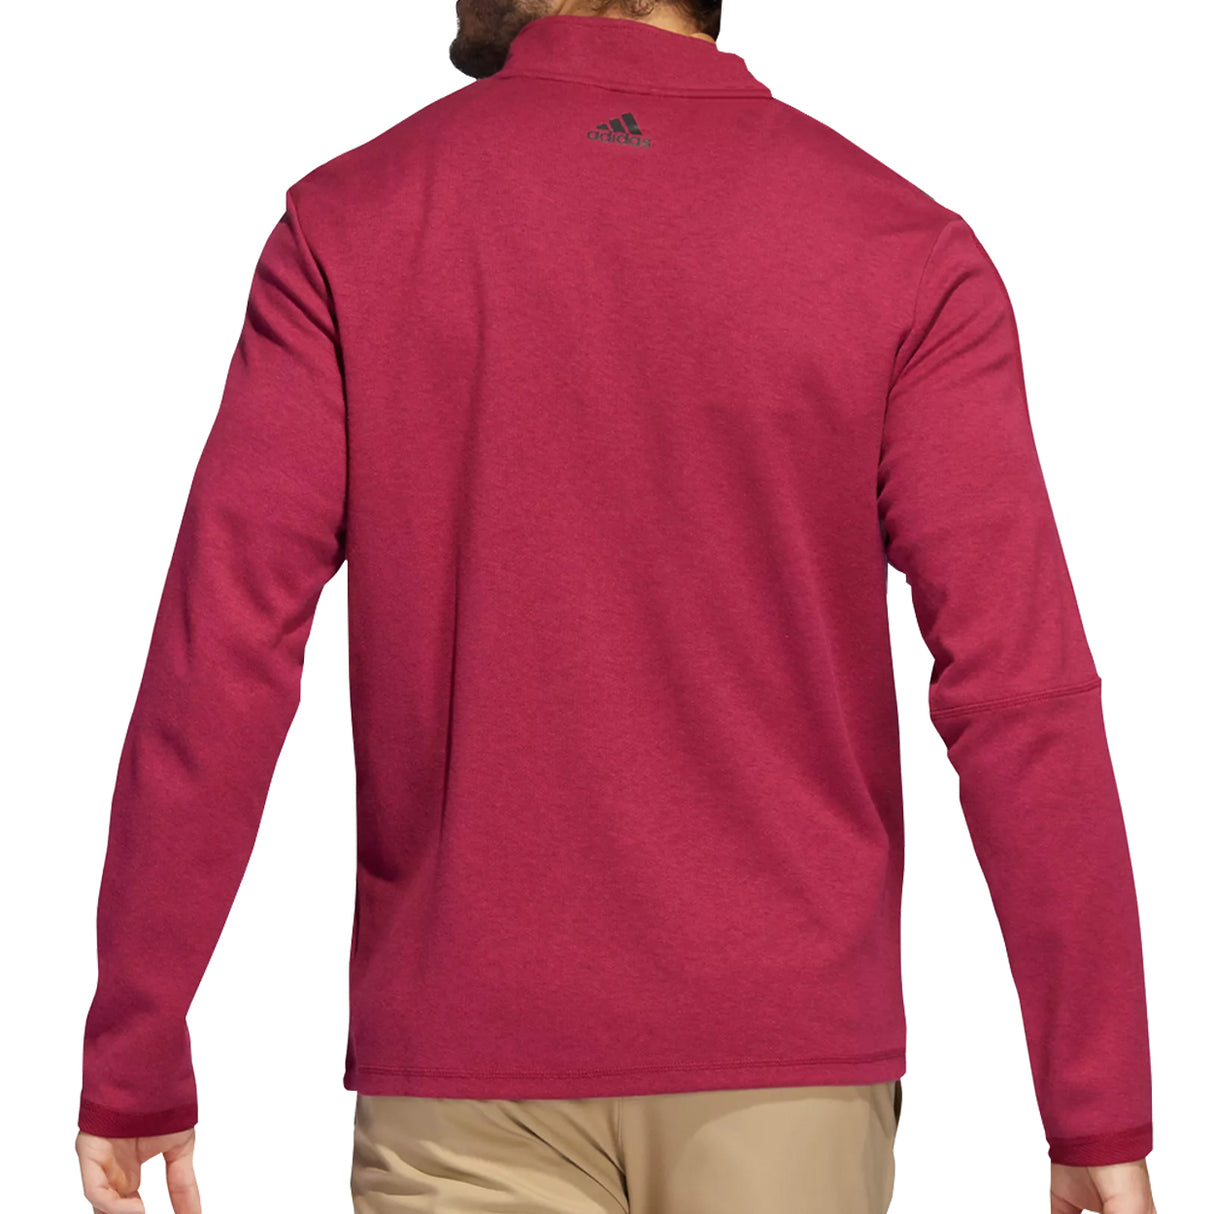 Adidas Golf Men's 3-Stripe Quarter-Zip Pullover Layering Piece